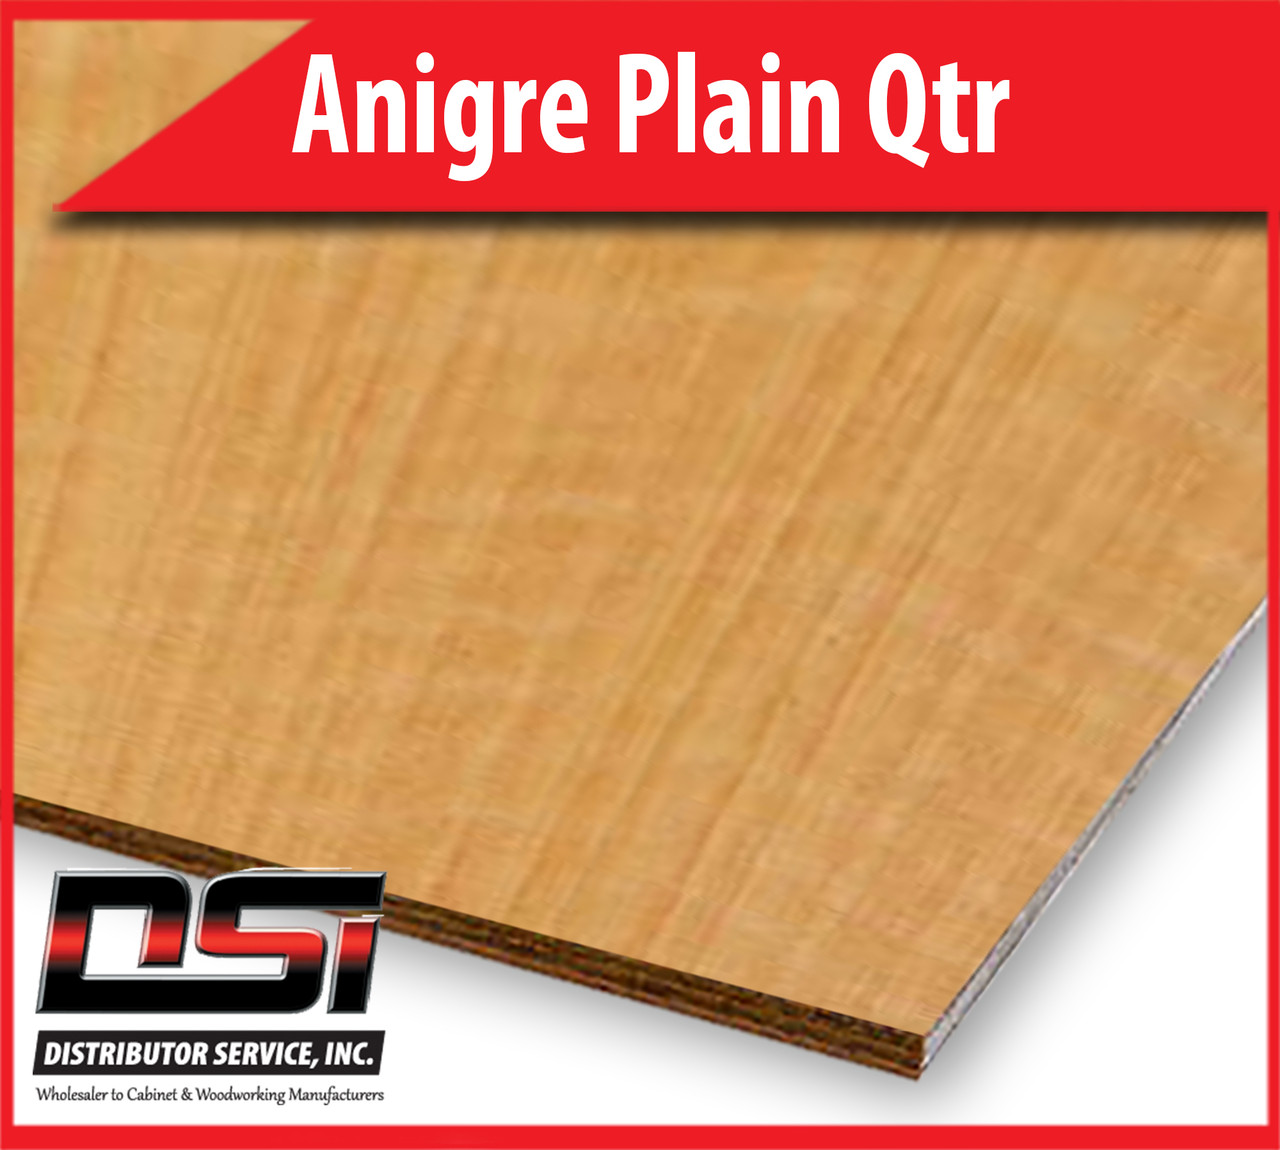 Anigre Plain Qtr Plywood Eurocore A-3 1/2" x 4x8